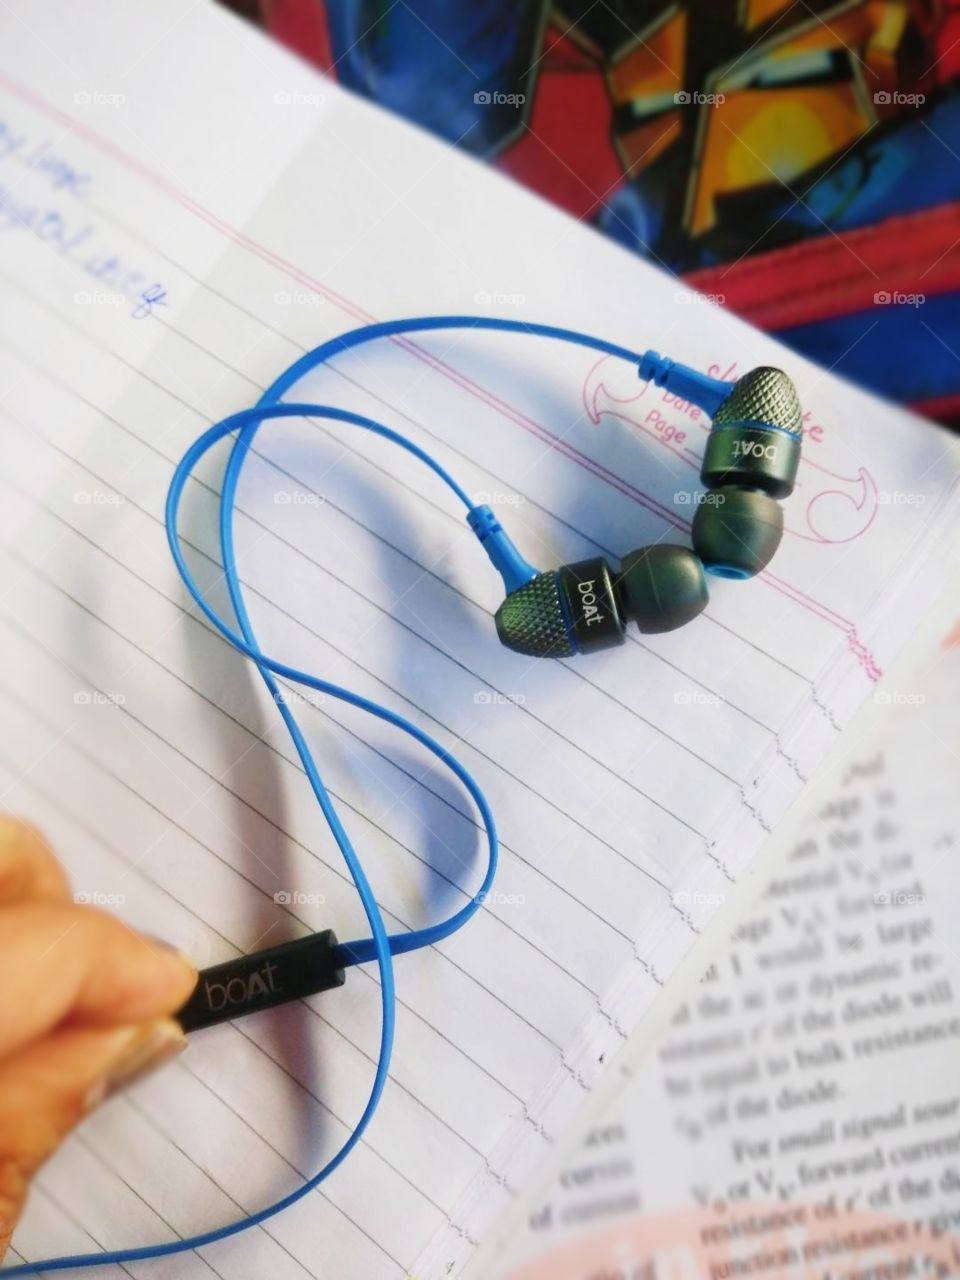 Boat headphones are best study partner you can have!!  #getintonirvana